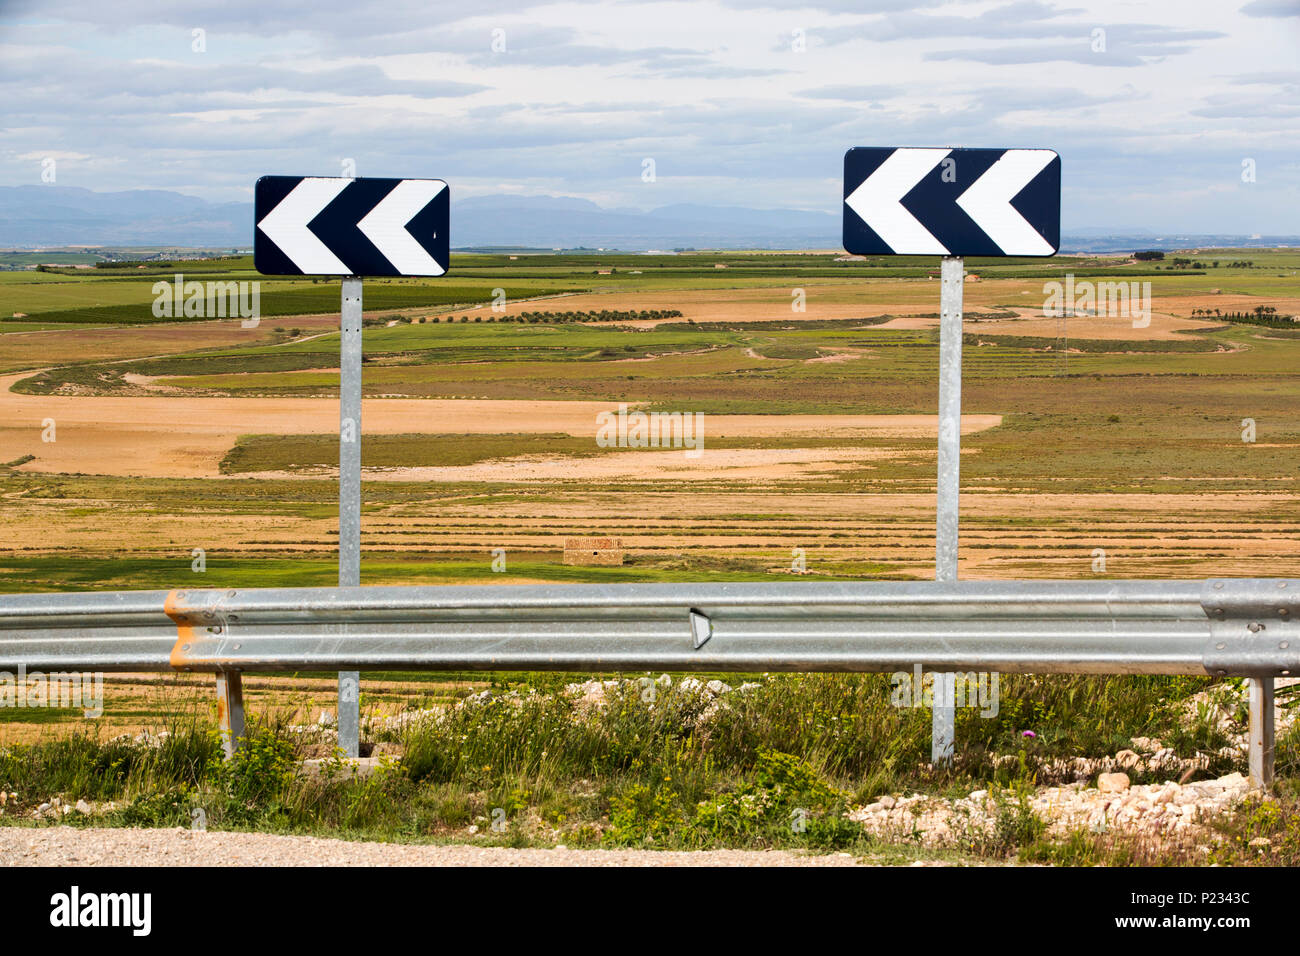 The arid plains around Albalata de Cinca, Huesca, Spain. Stock Photo